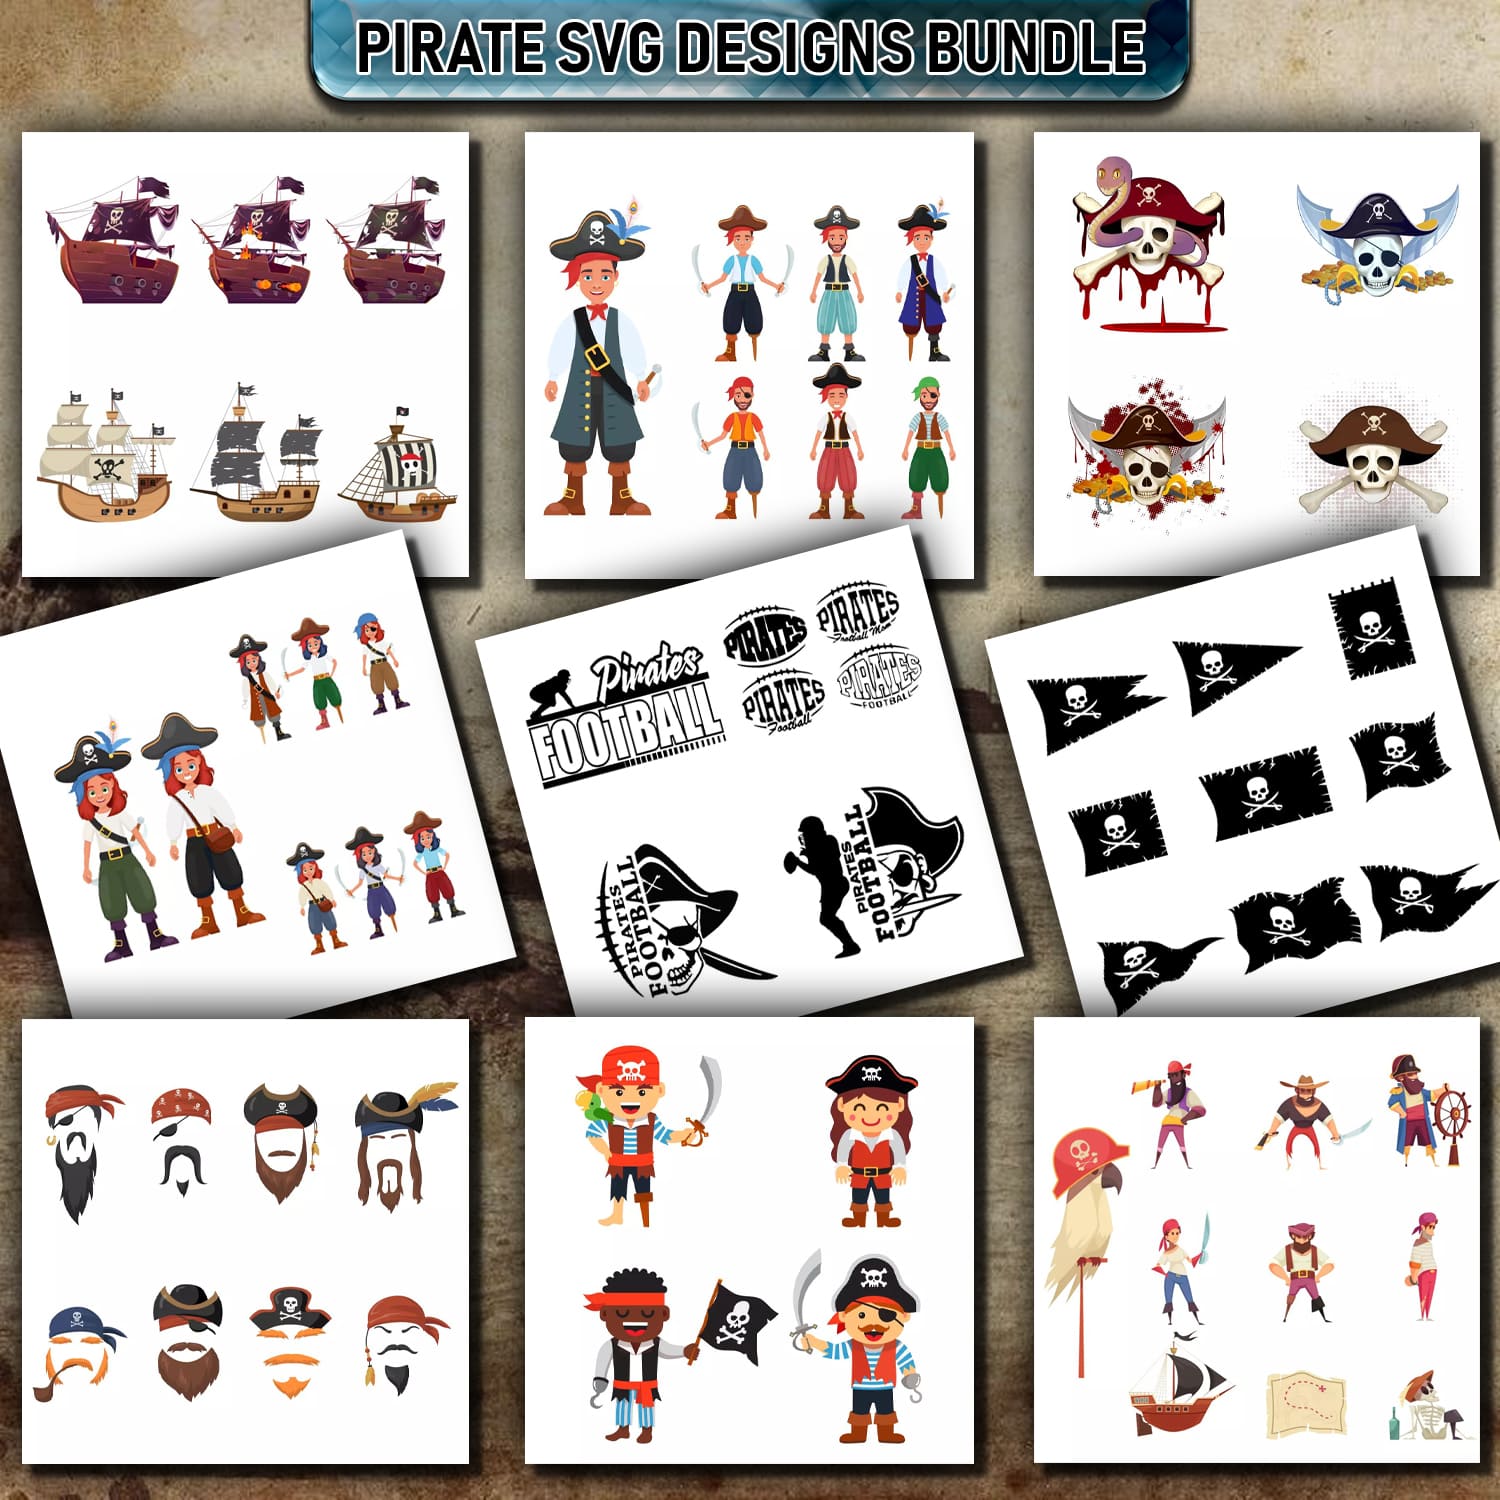 Pirate SVG Designs Big Bundle cover image.